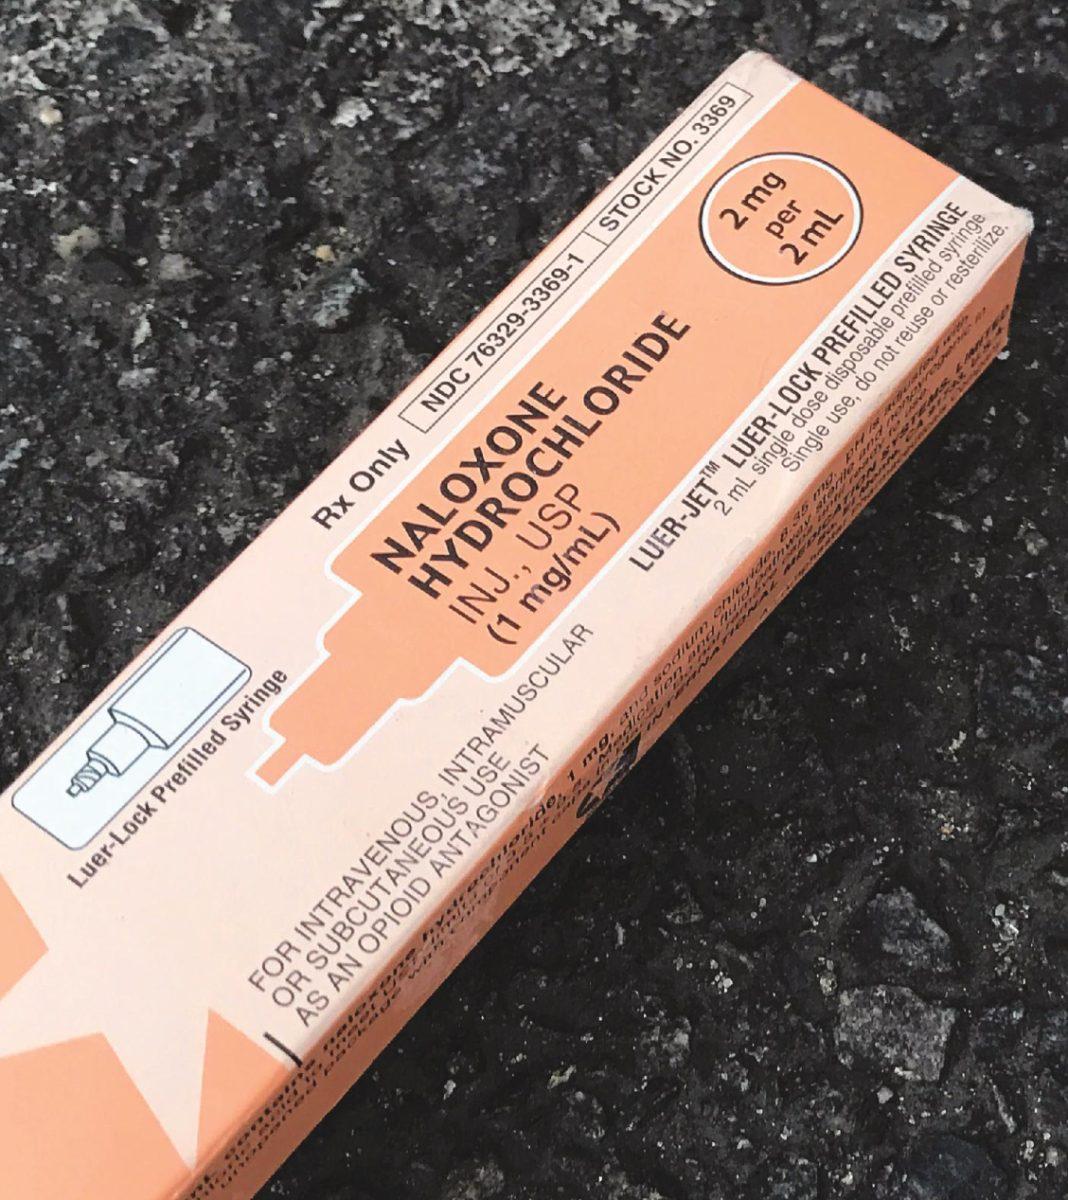 A box of Narcan (Photo by Matt Haubenstein ’15, M.A. ’18).